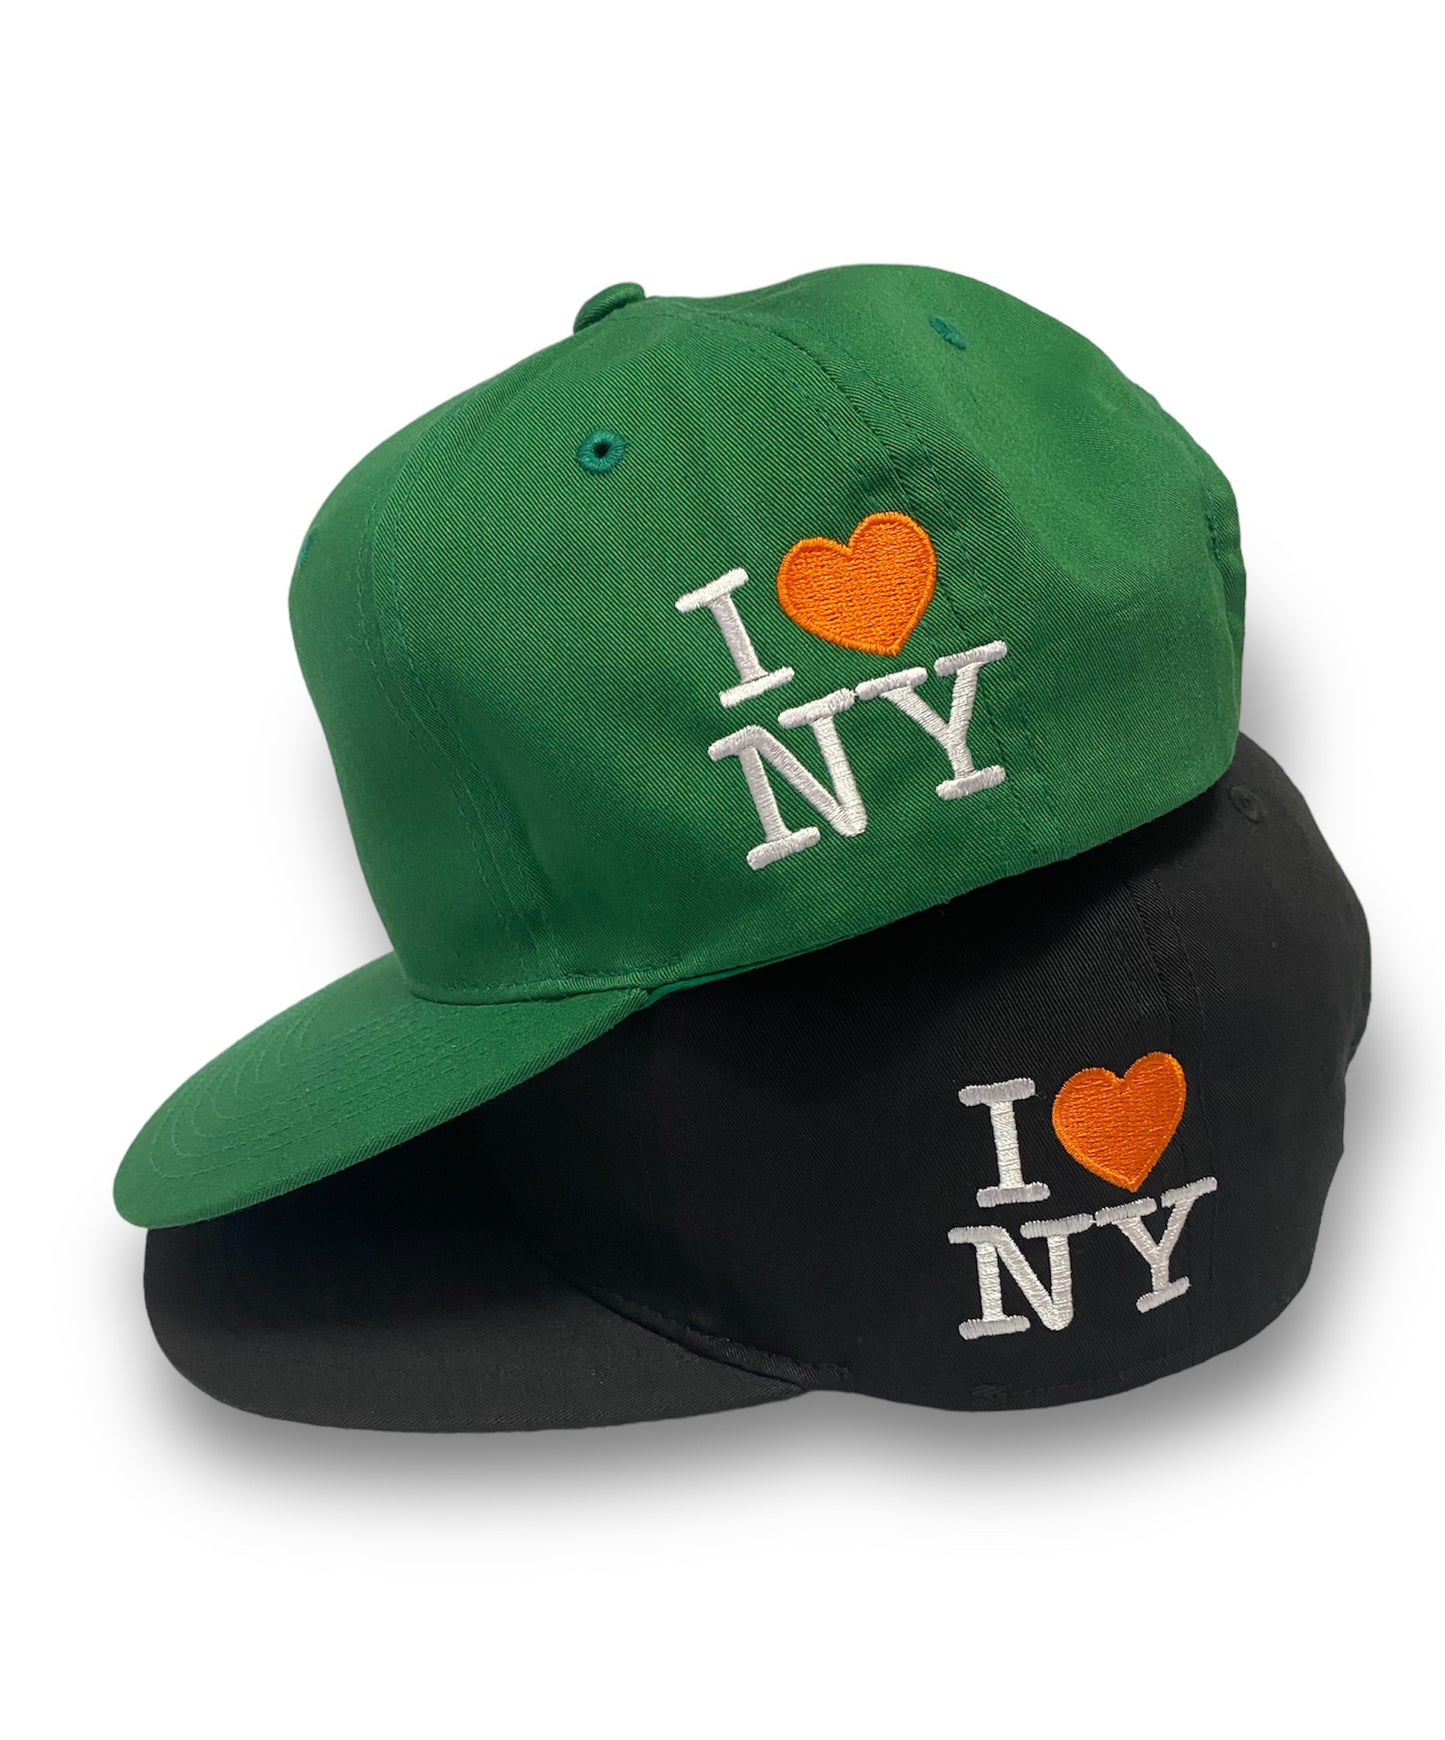 NO BRAND : Bootleg New York Mets Snapback Cap